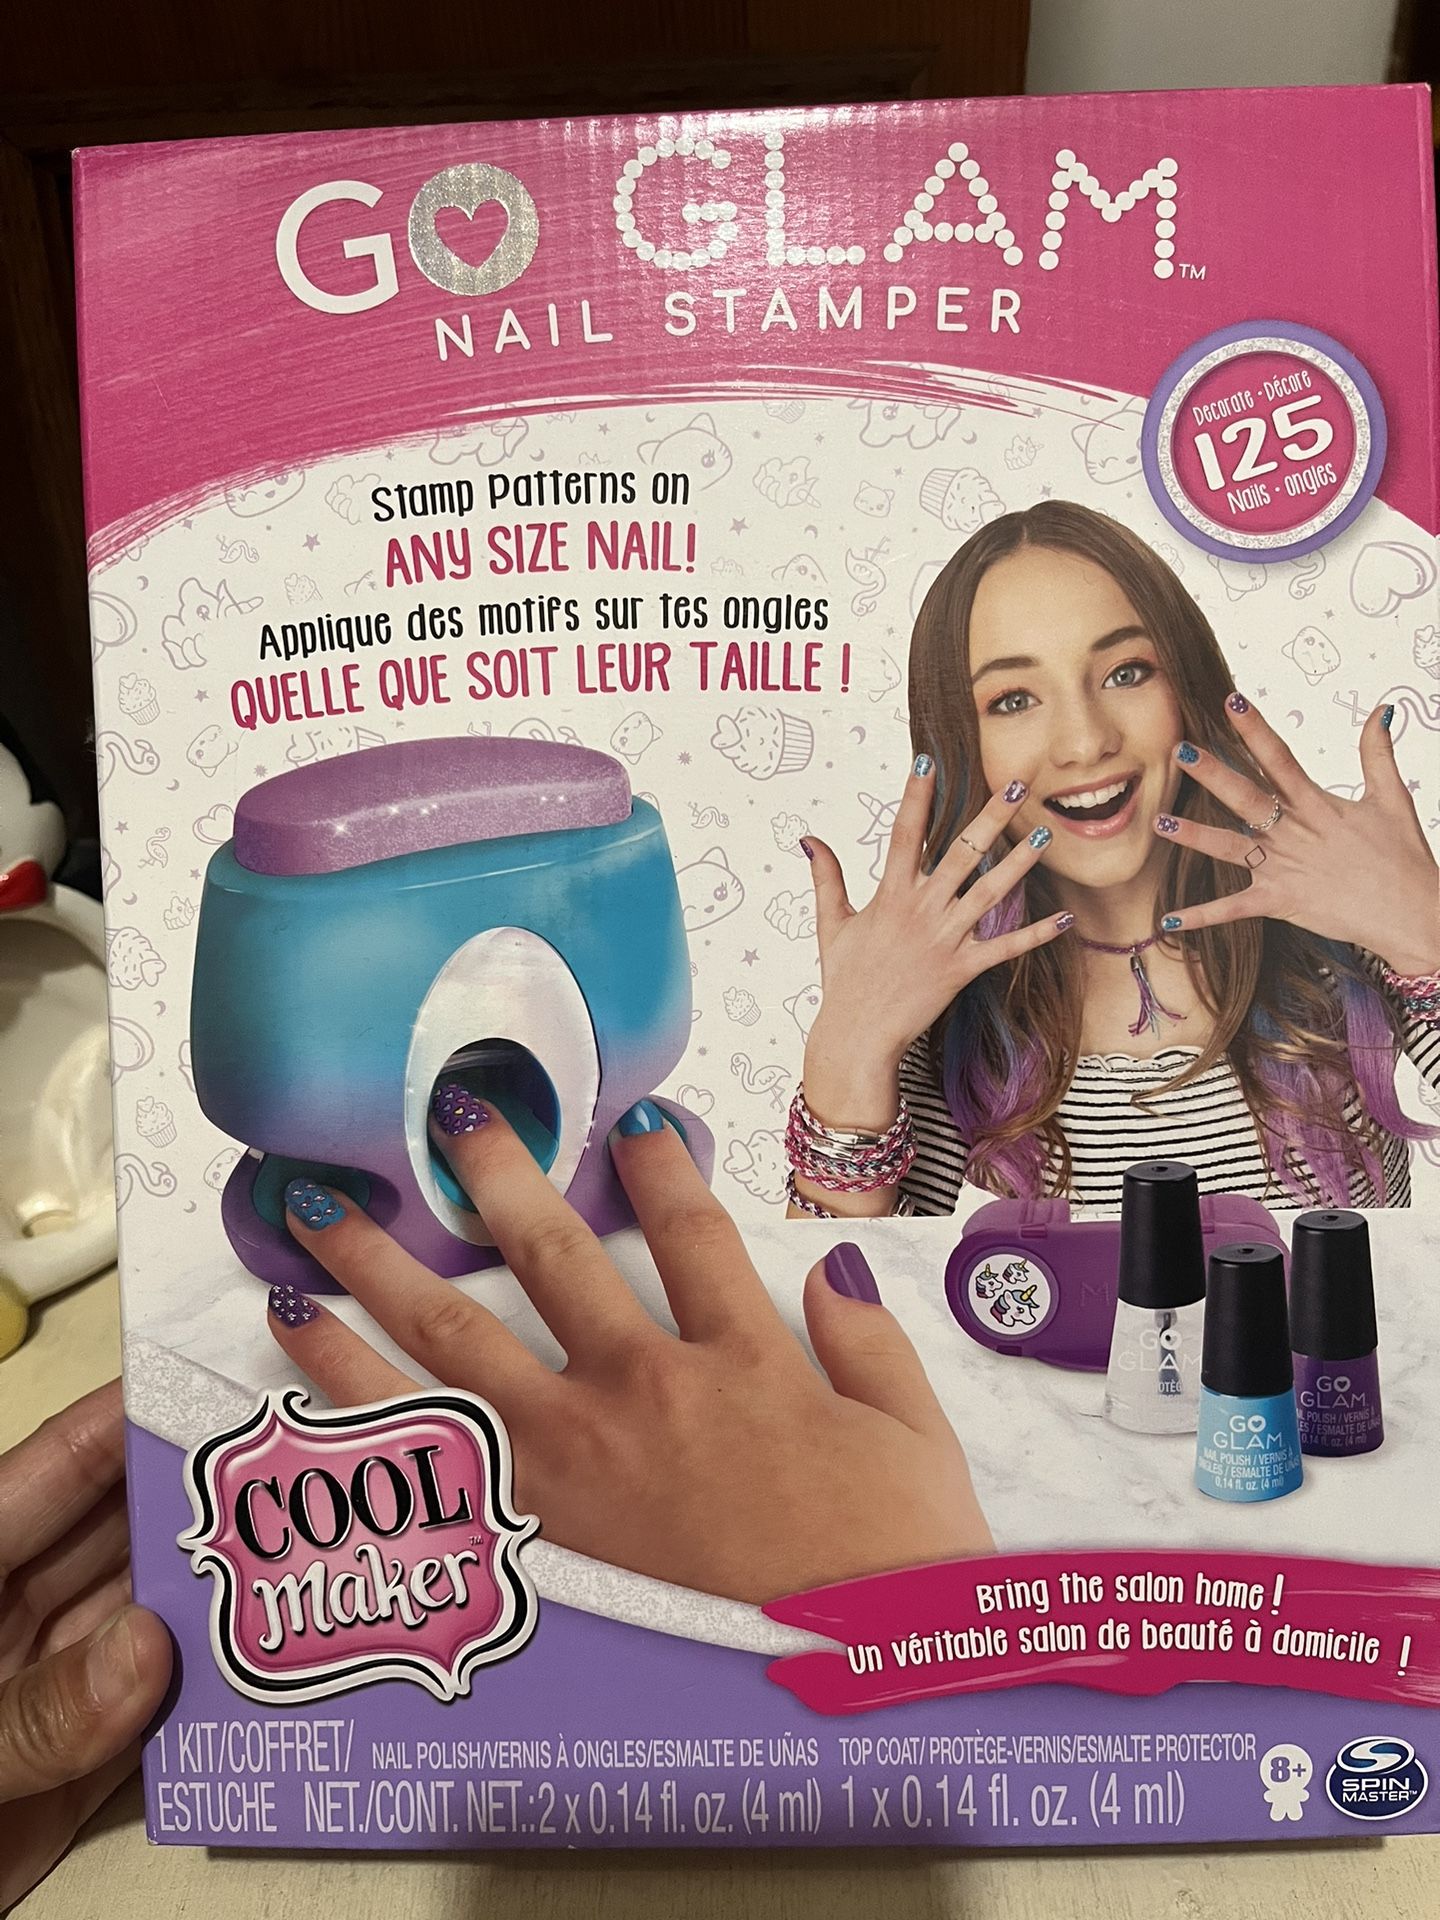 Go Glam Nail Stamper